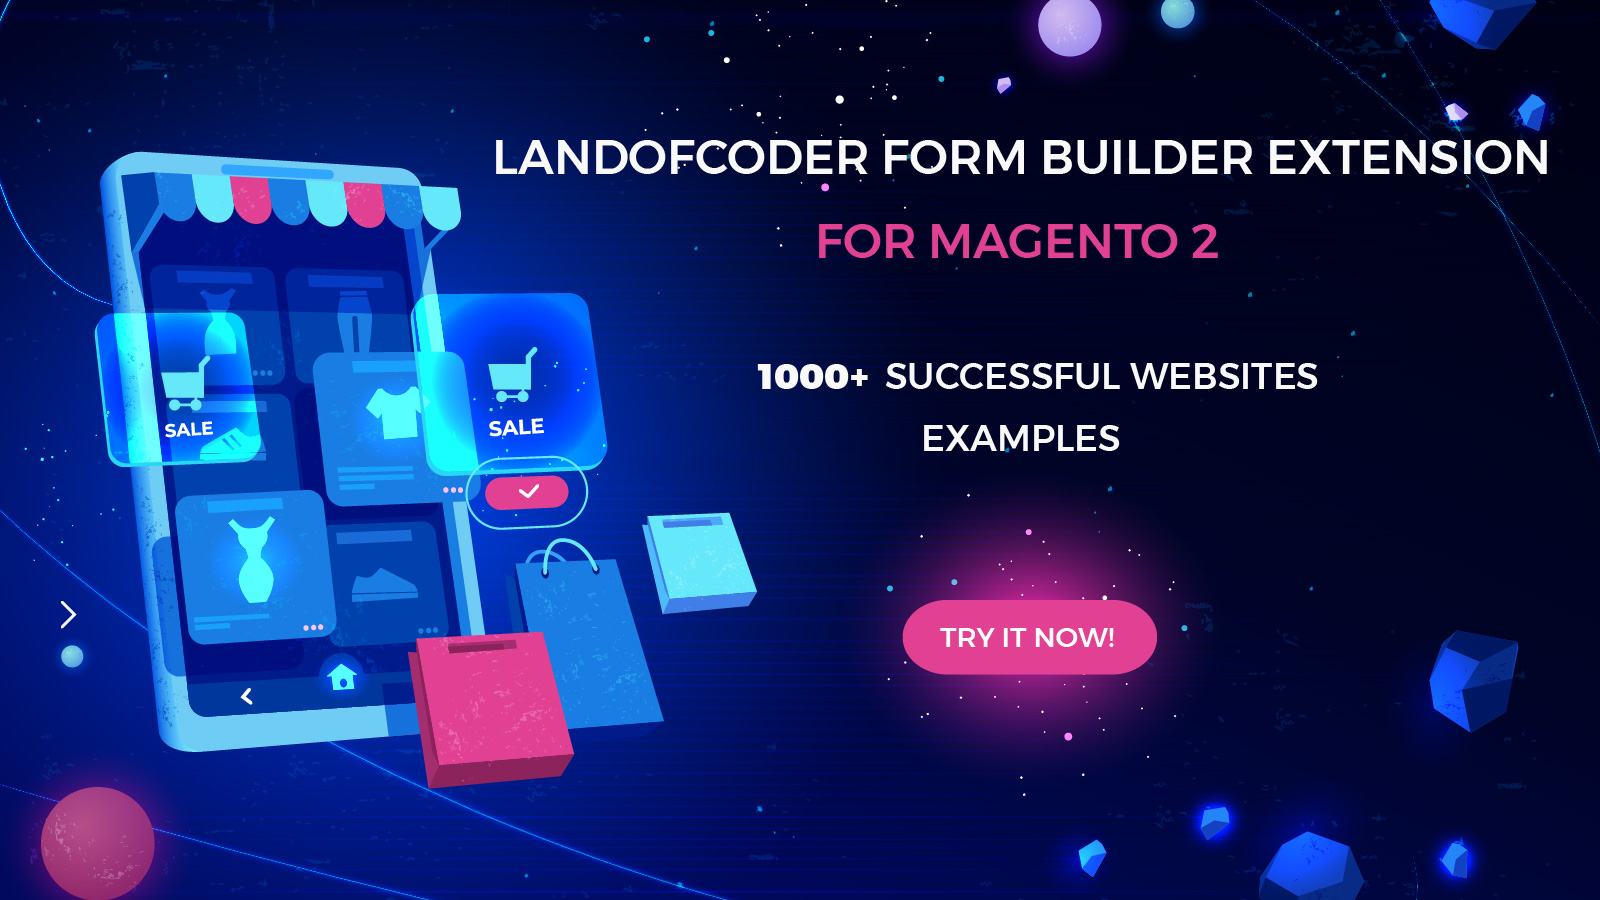 Landofcoder magento 2 form builder successful websites examples